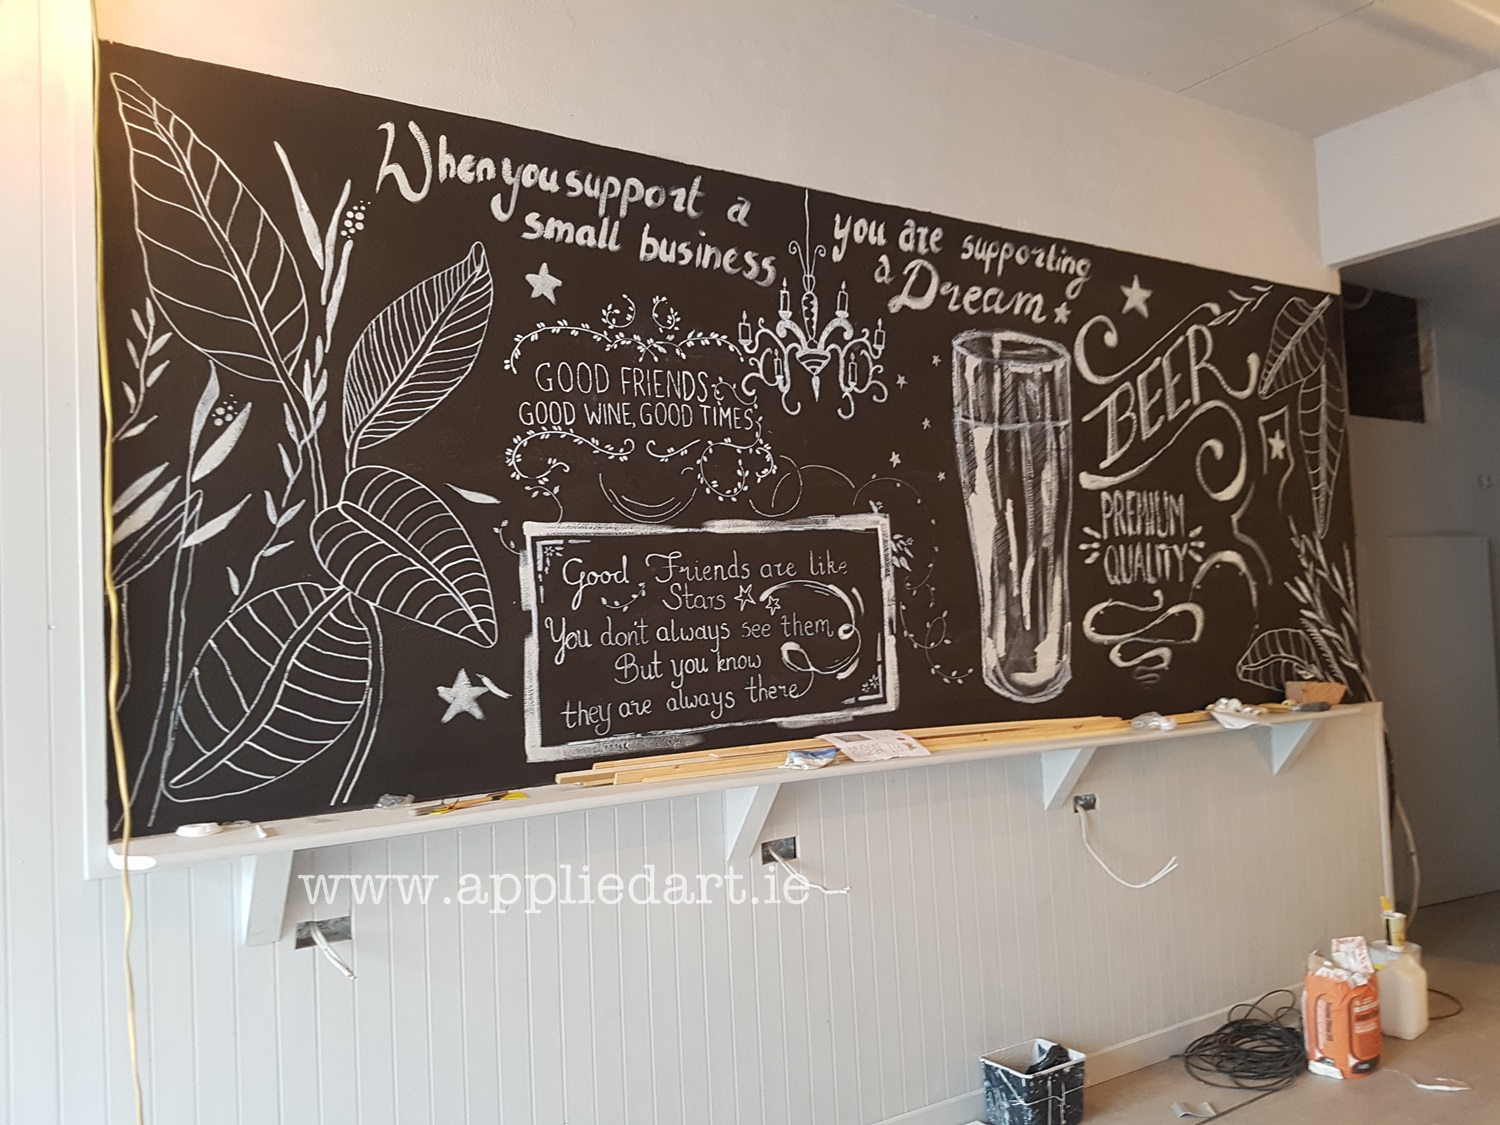 aKlaudia Byrne Applied Art chalk art cafe nwetown mount kennedy irish artist chalk board commercial art painting chalk branding ireland (35)